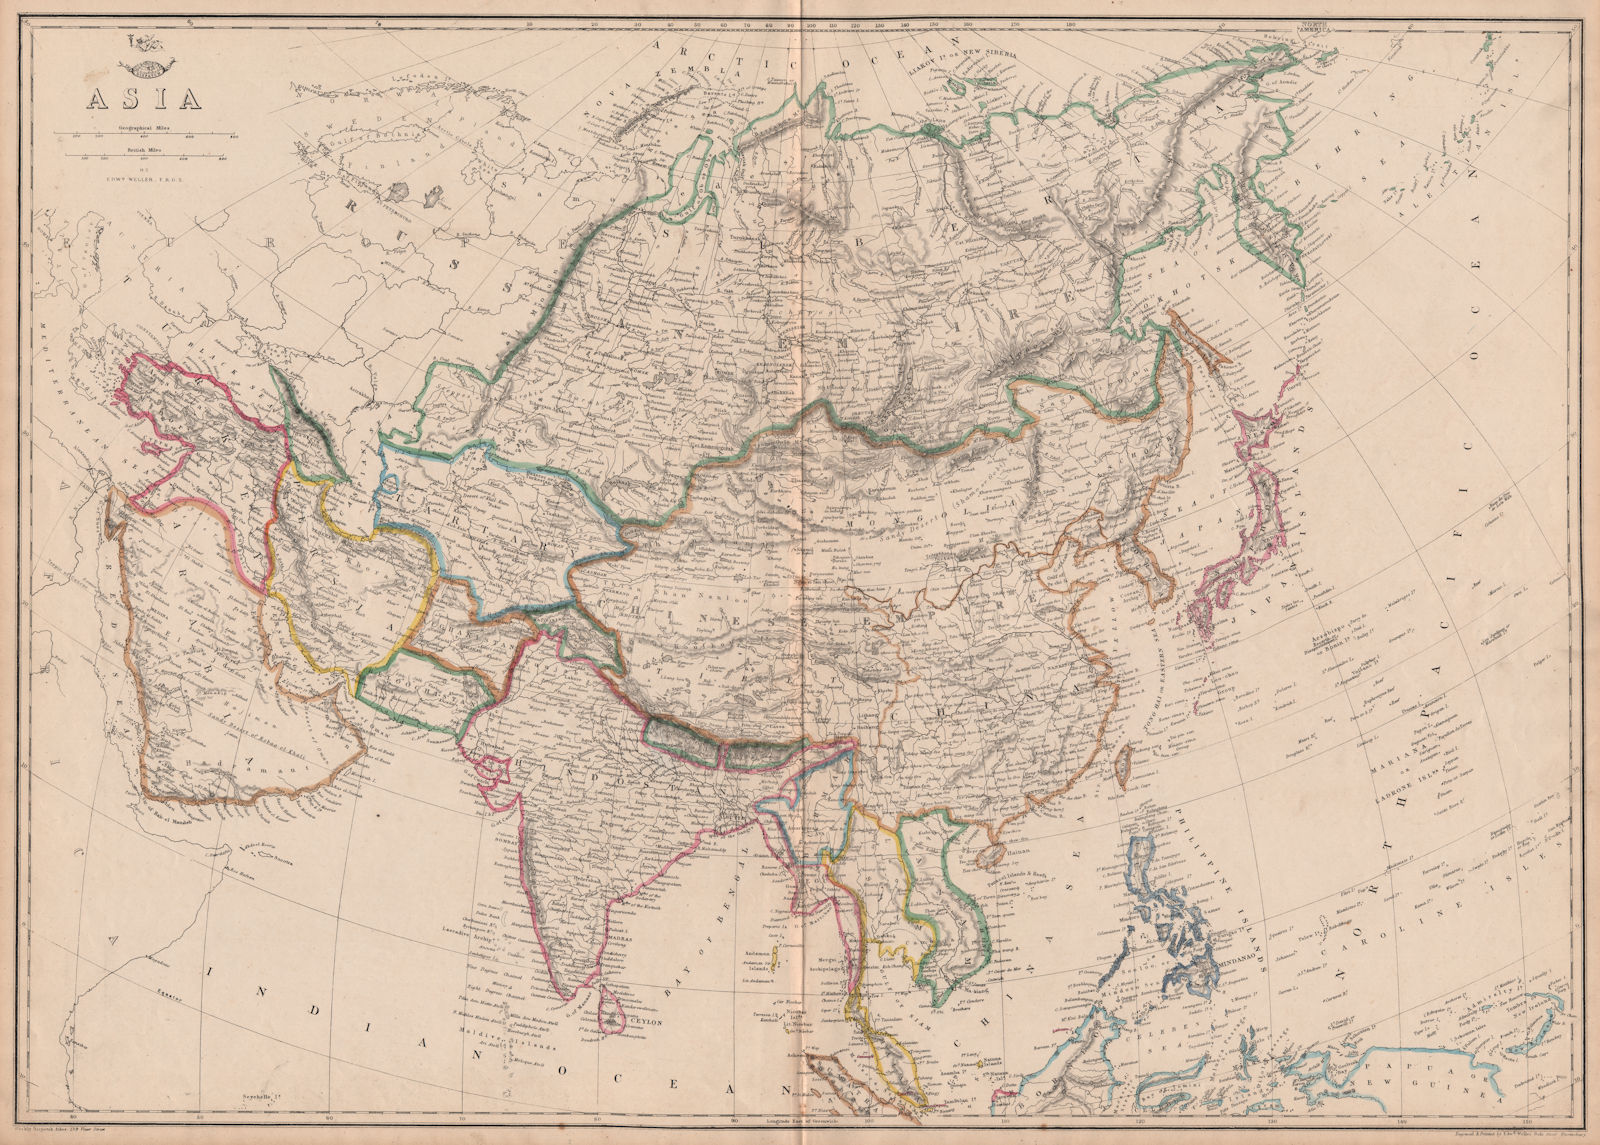 ASIA w/ Great Wall of China. Tartary Siam Anam.Sarawak Kingdom. WELLER 1863 map